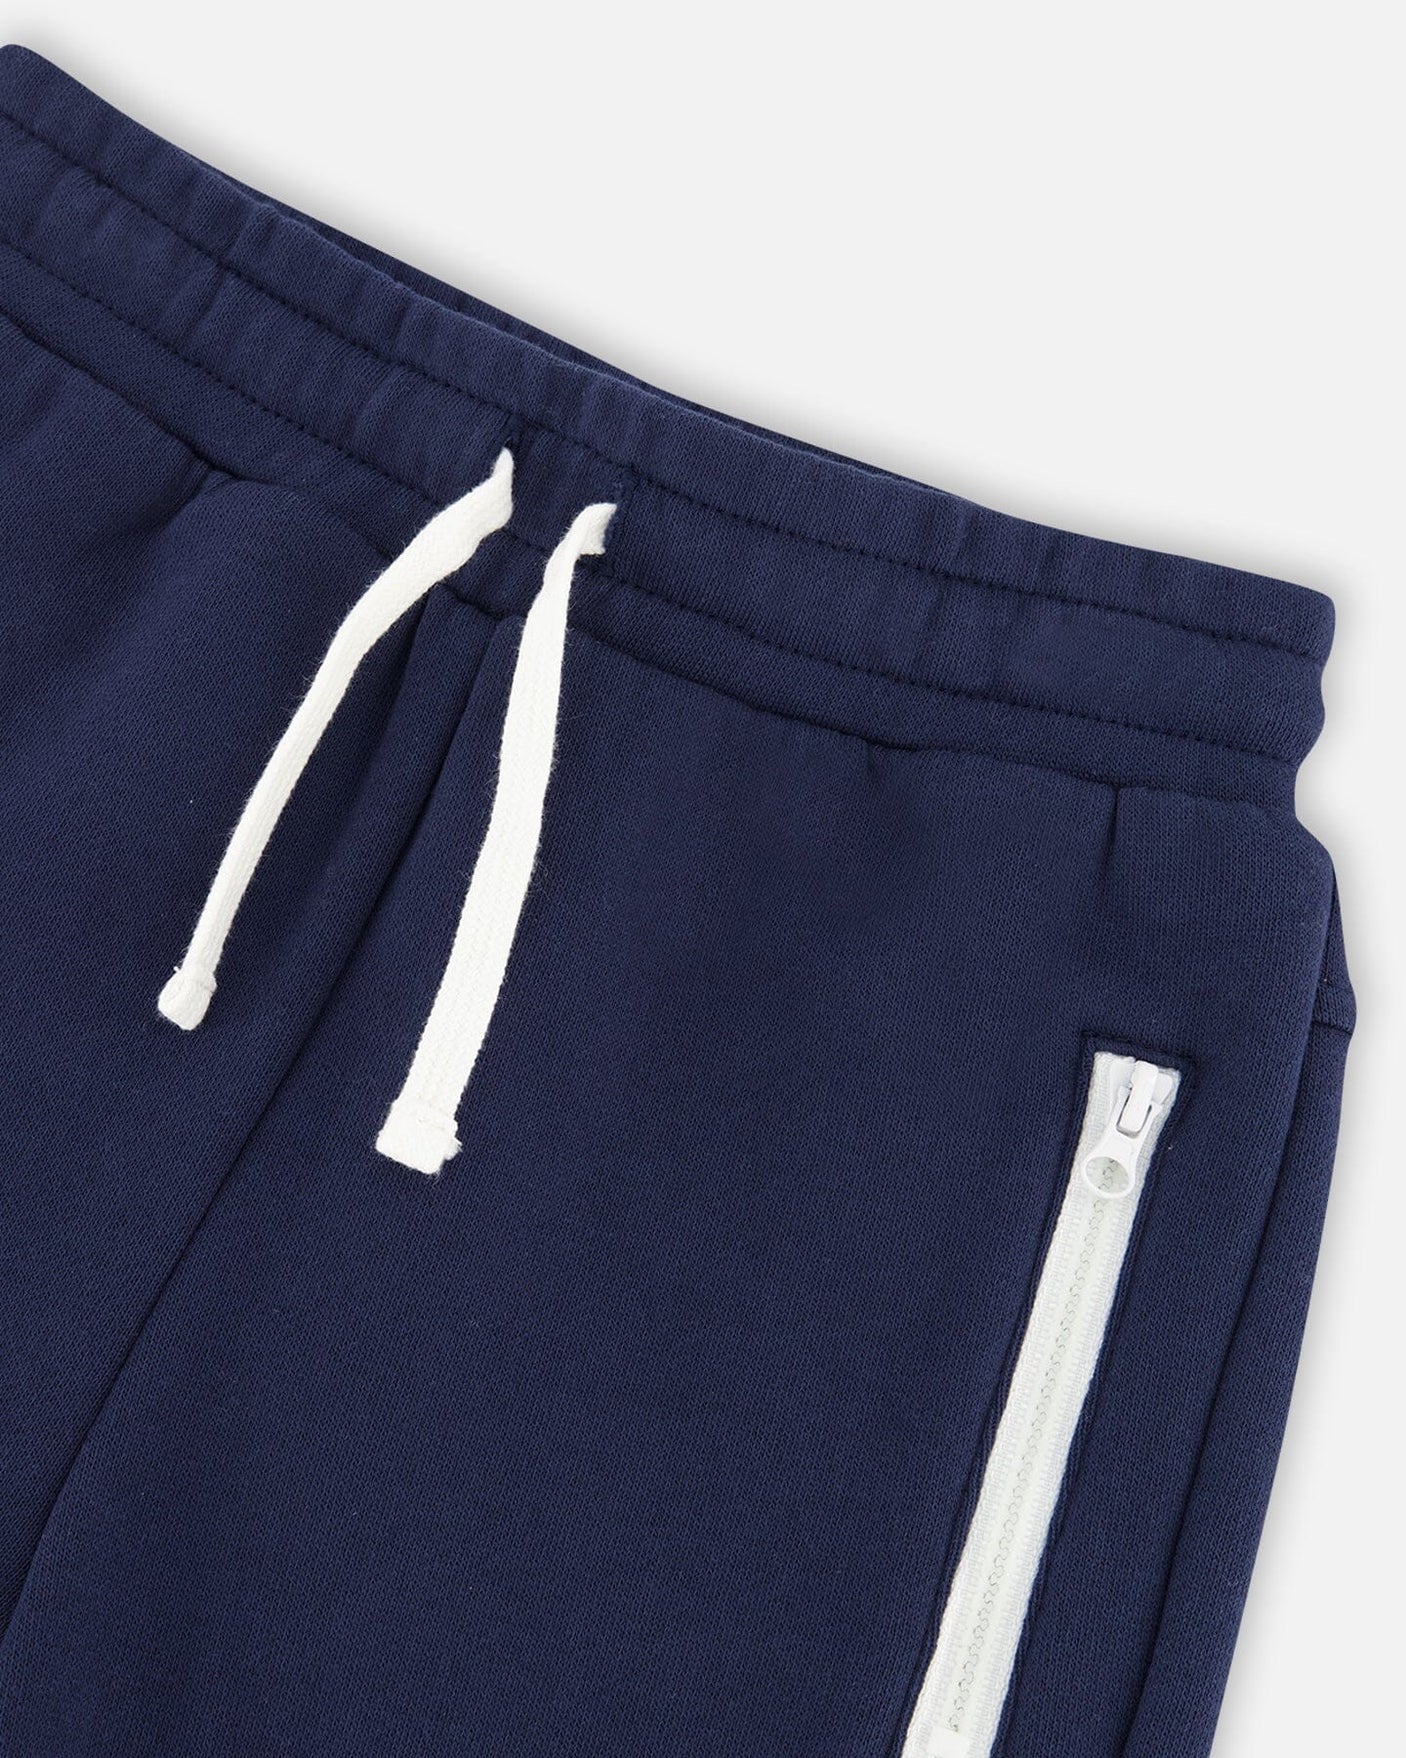 Fleece Sweatpants With Zipper Pockets Navy-4